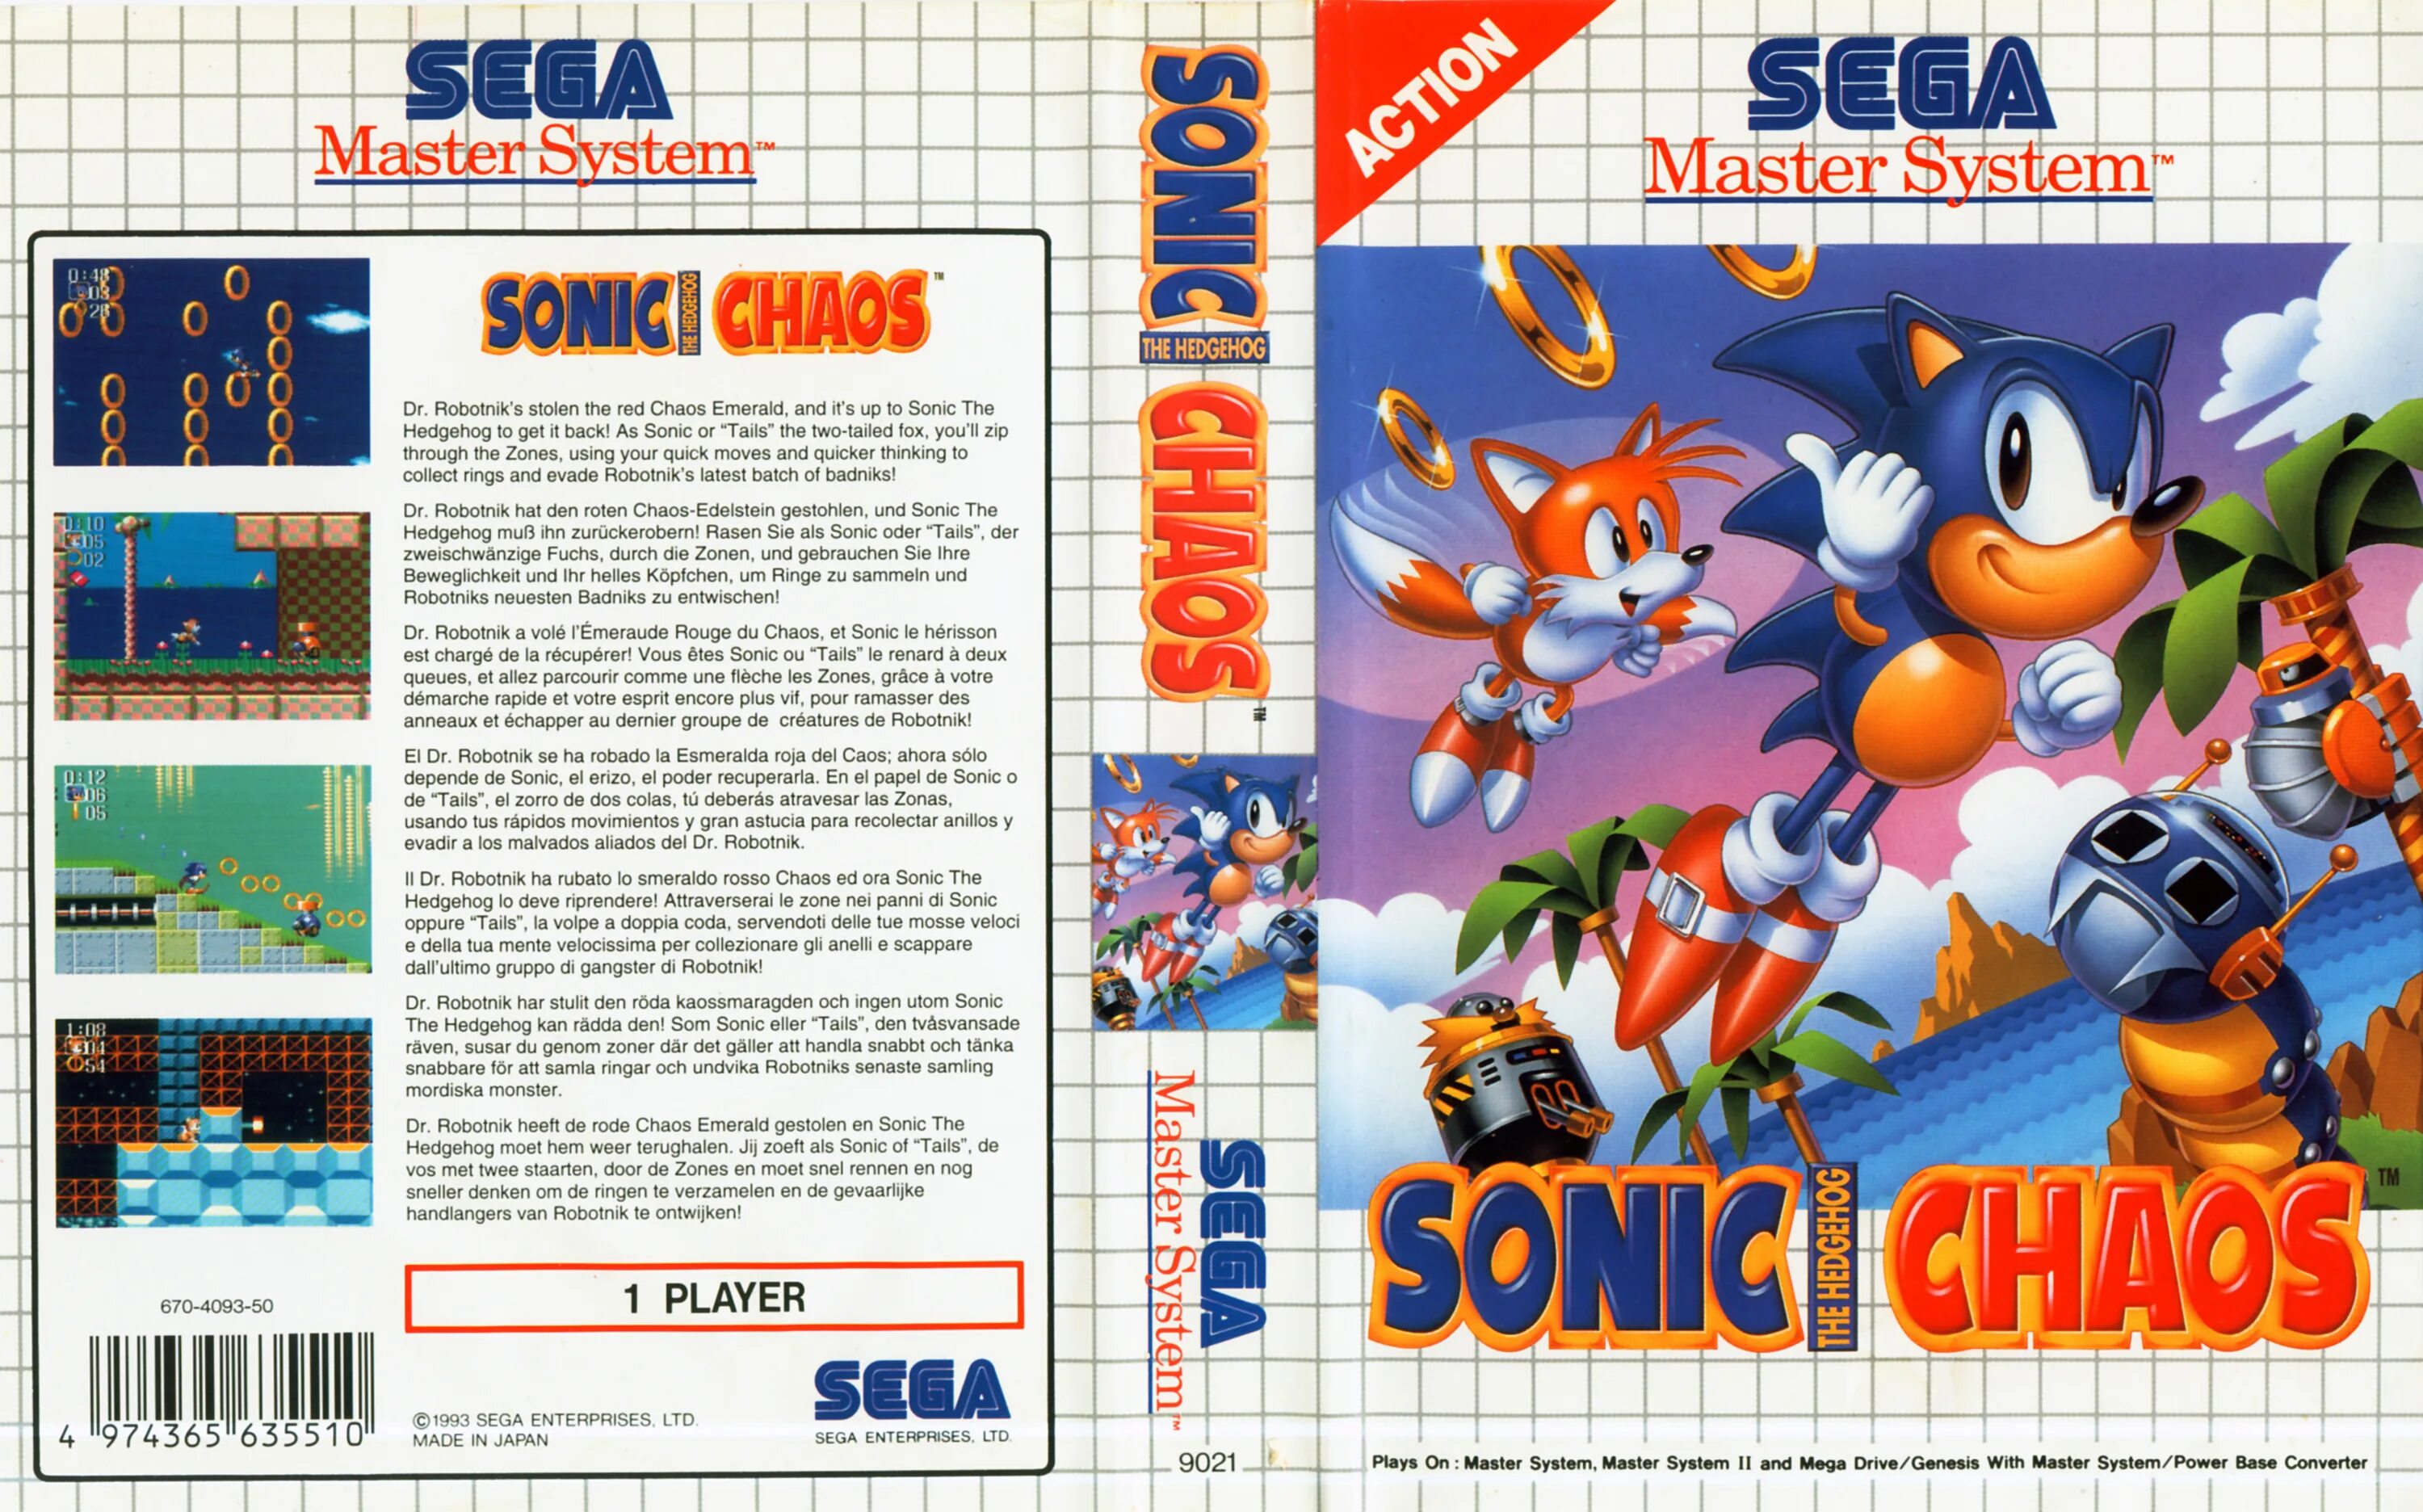 Sonic Chaos Sega Master System. Соник 1 мастер систем. Sonic the Hedgehog 1 Sega Master System. Sonic the Hedgehog Chaos игра. Sonic master system